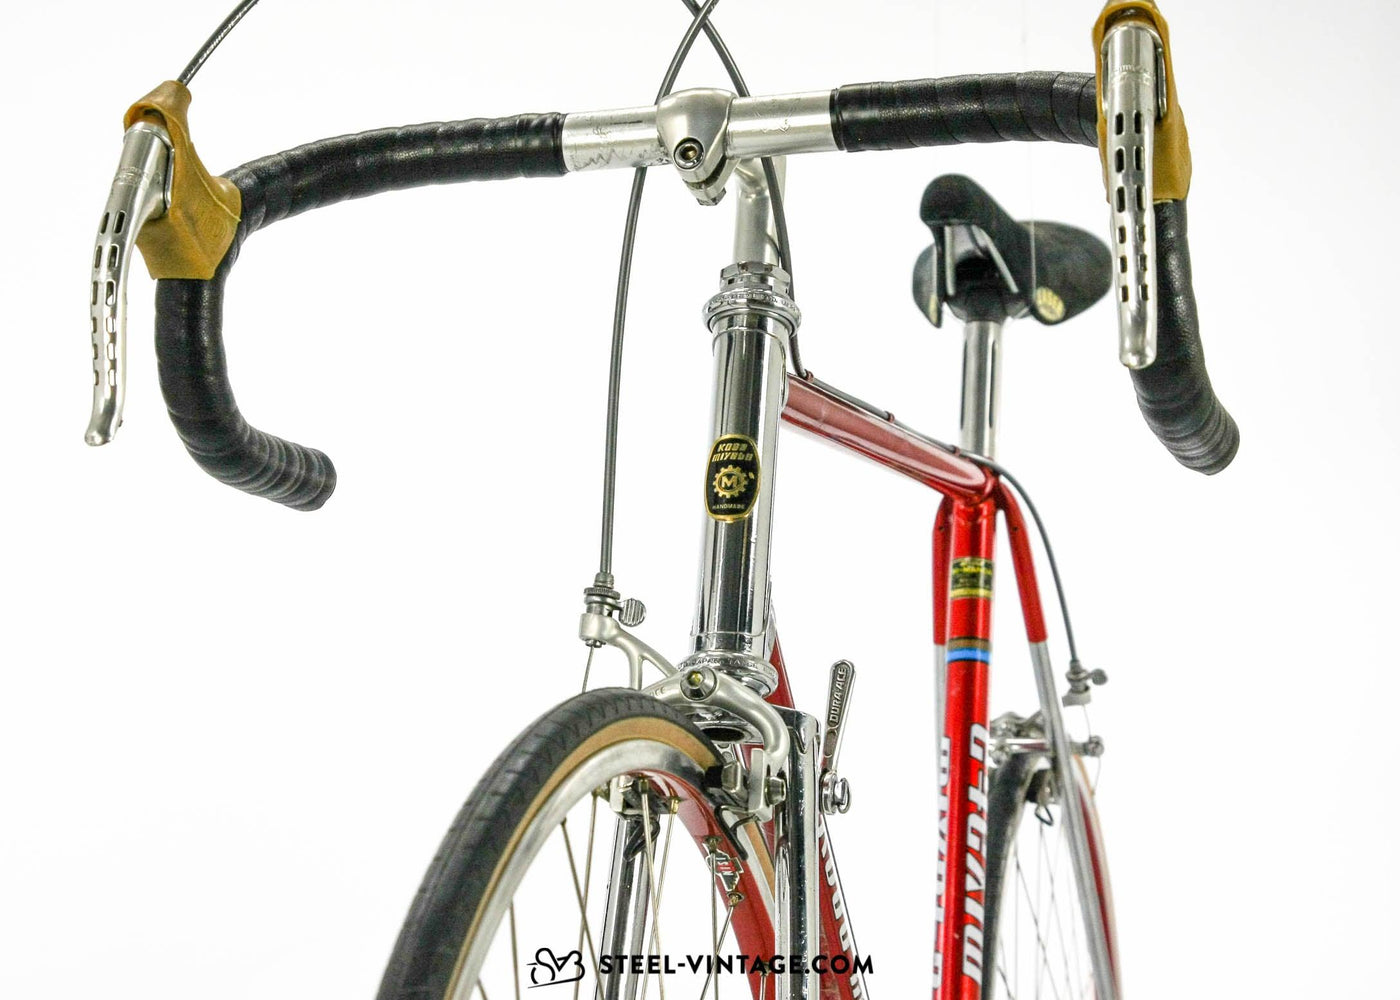 Koga Miyata Classic Roadbike 1979 - Steel Vintage Bikes